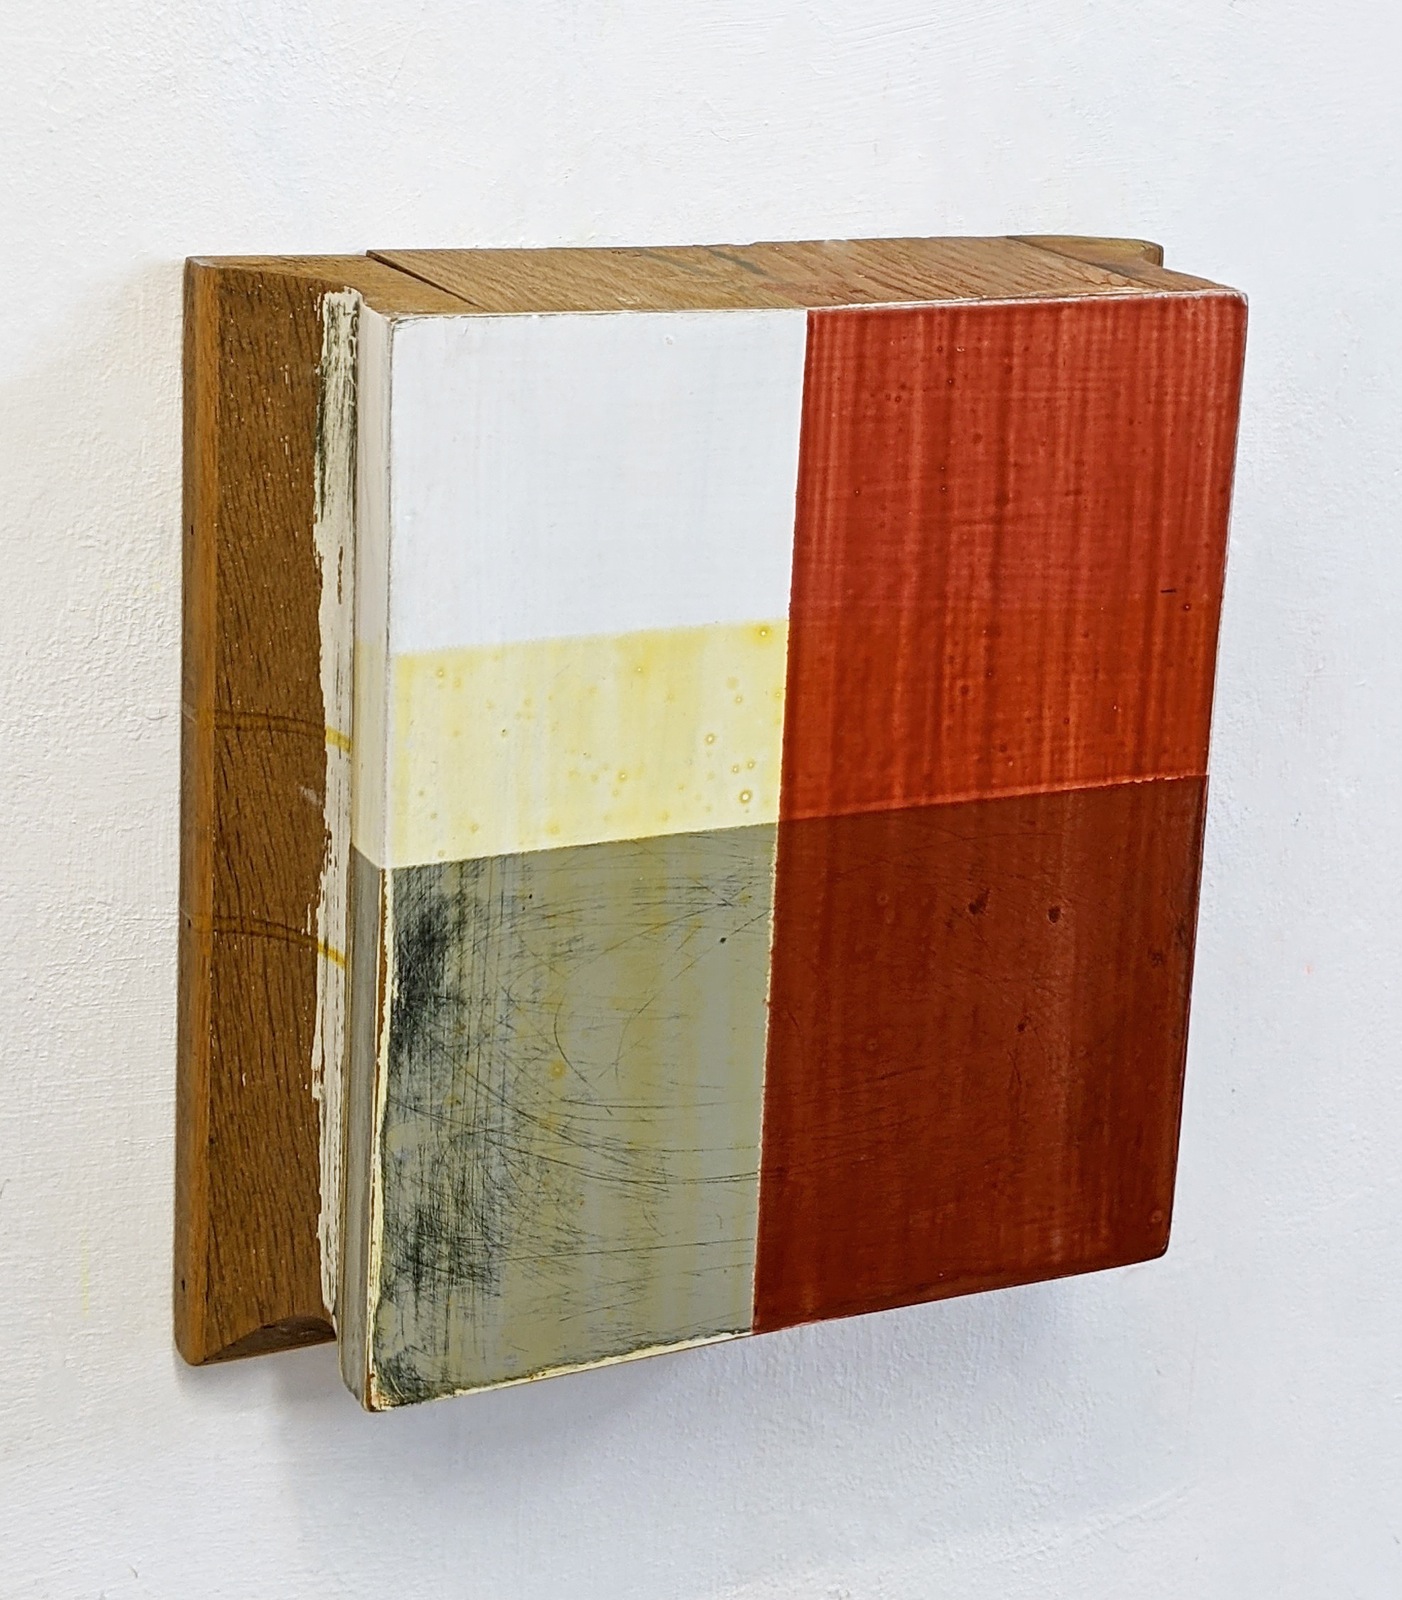 "Sockel II", 32x33x11 cm, Acrylfarbe, Holz, 1996